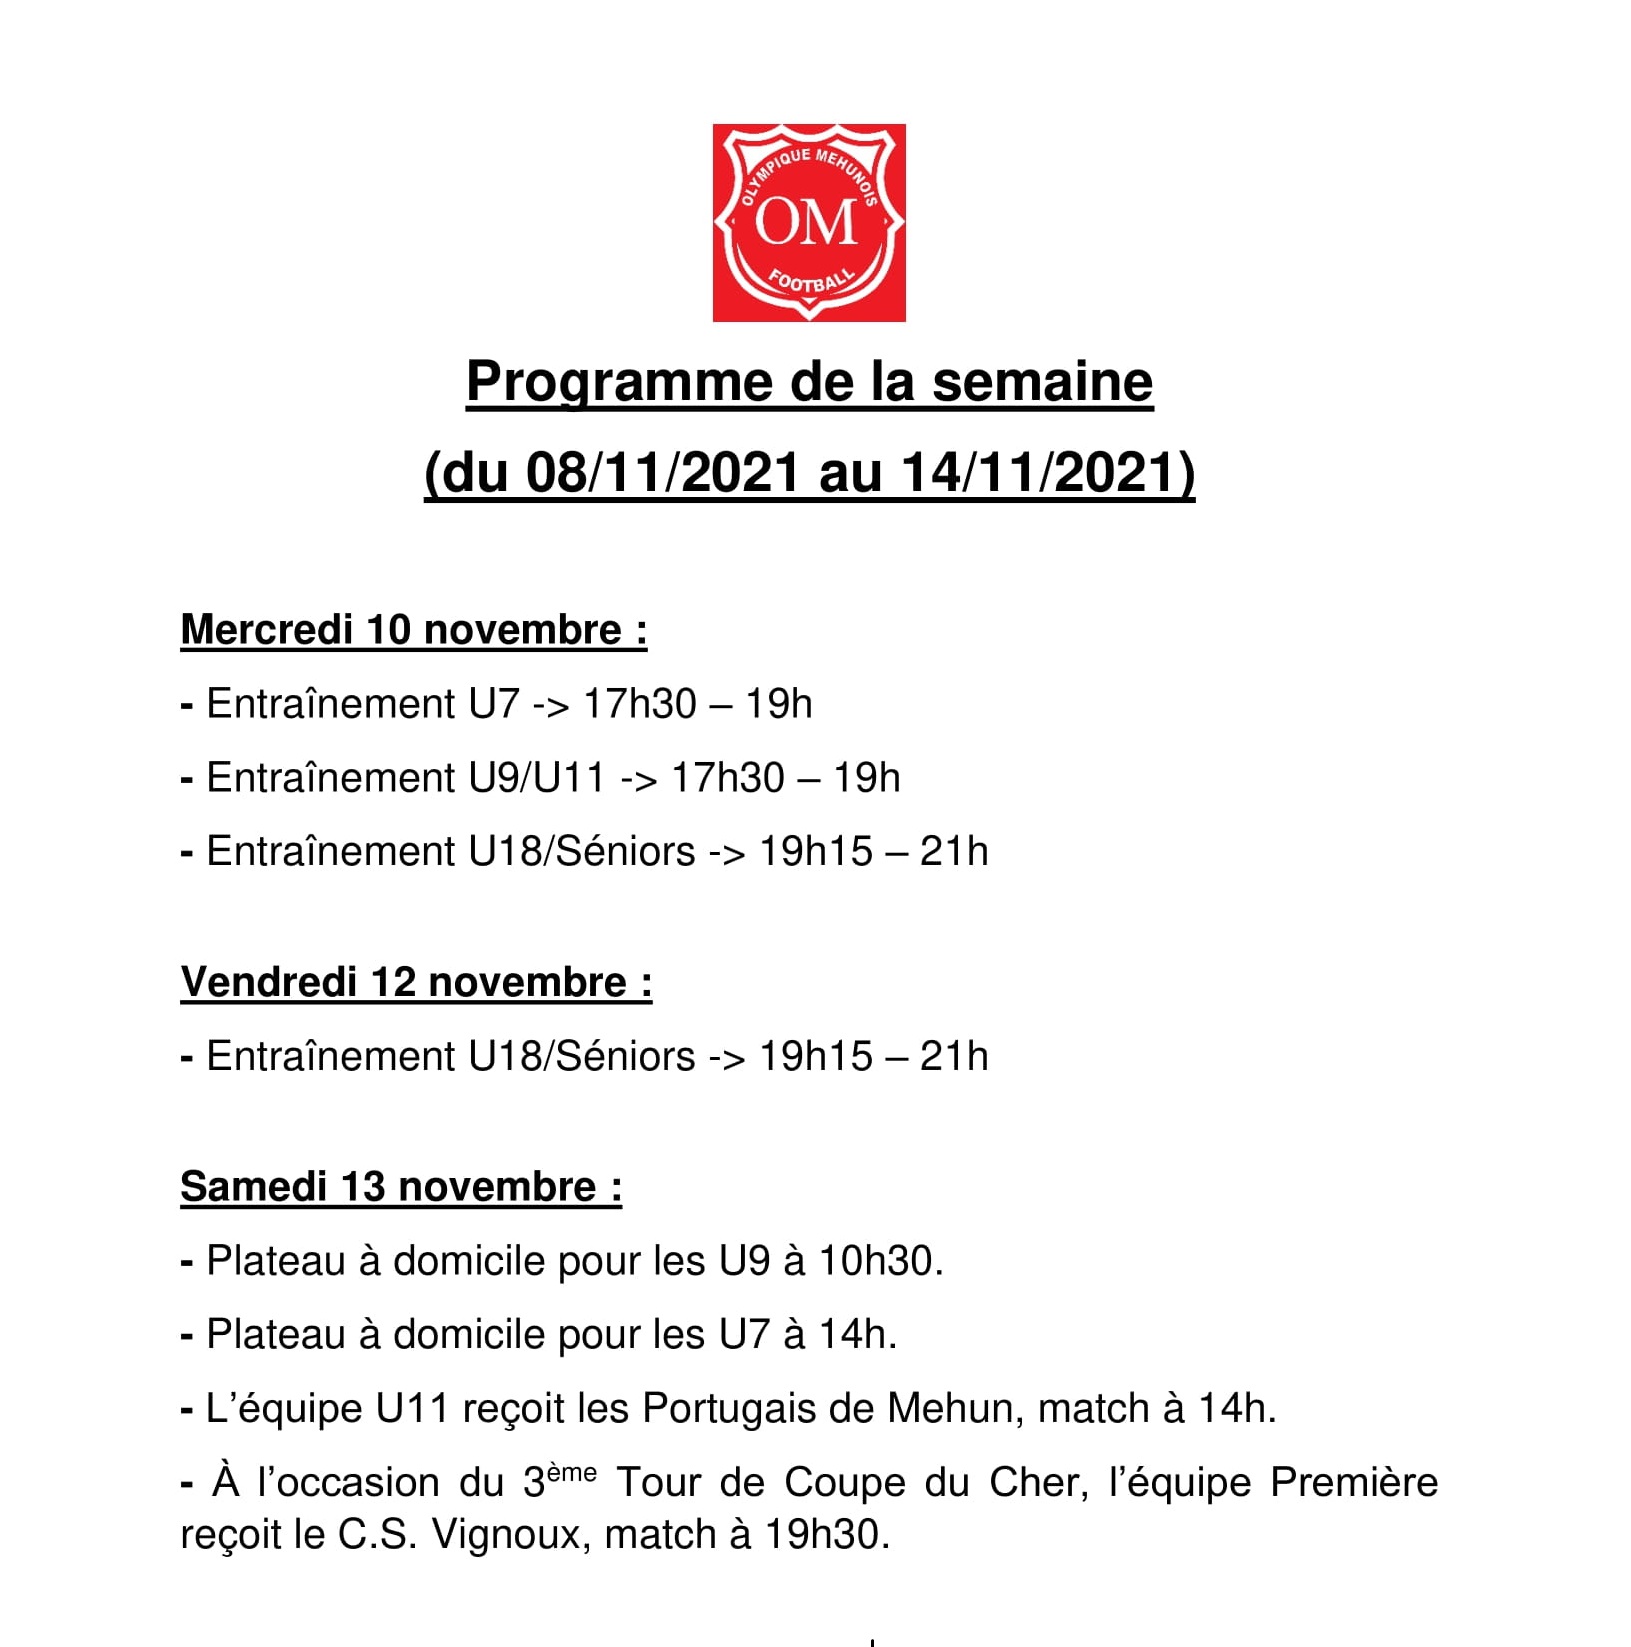 Programme_de_la_semaine_08-11-2021_14-11-2021.jpg